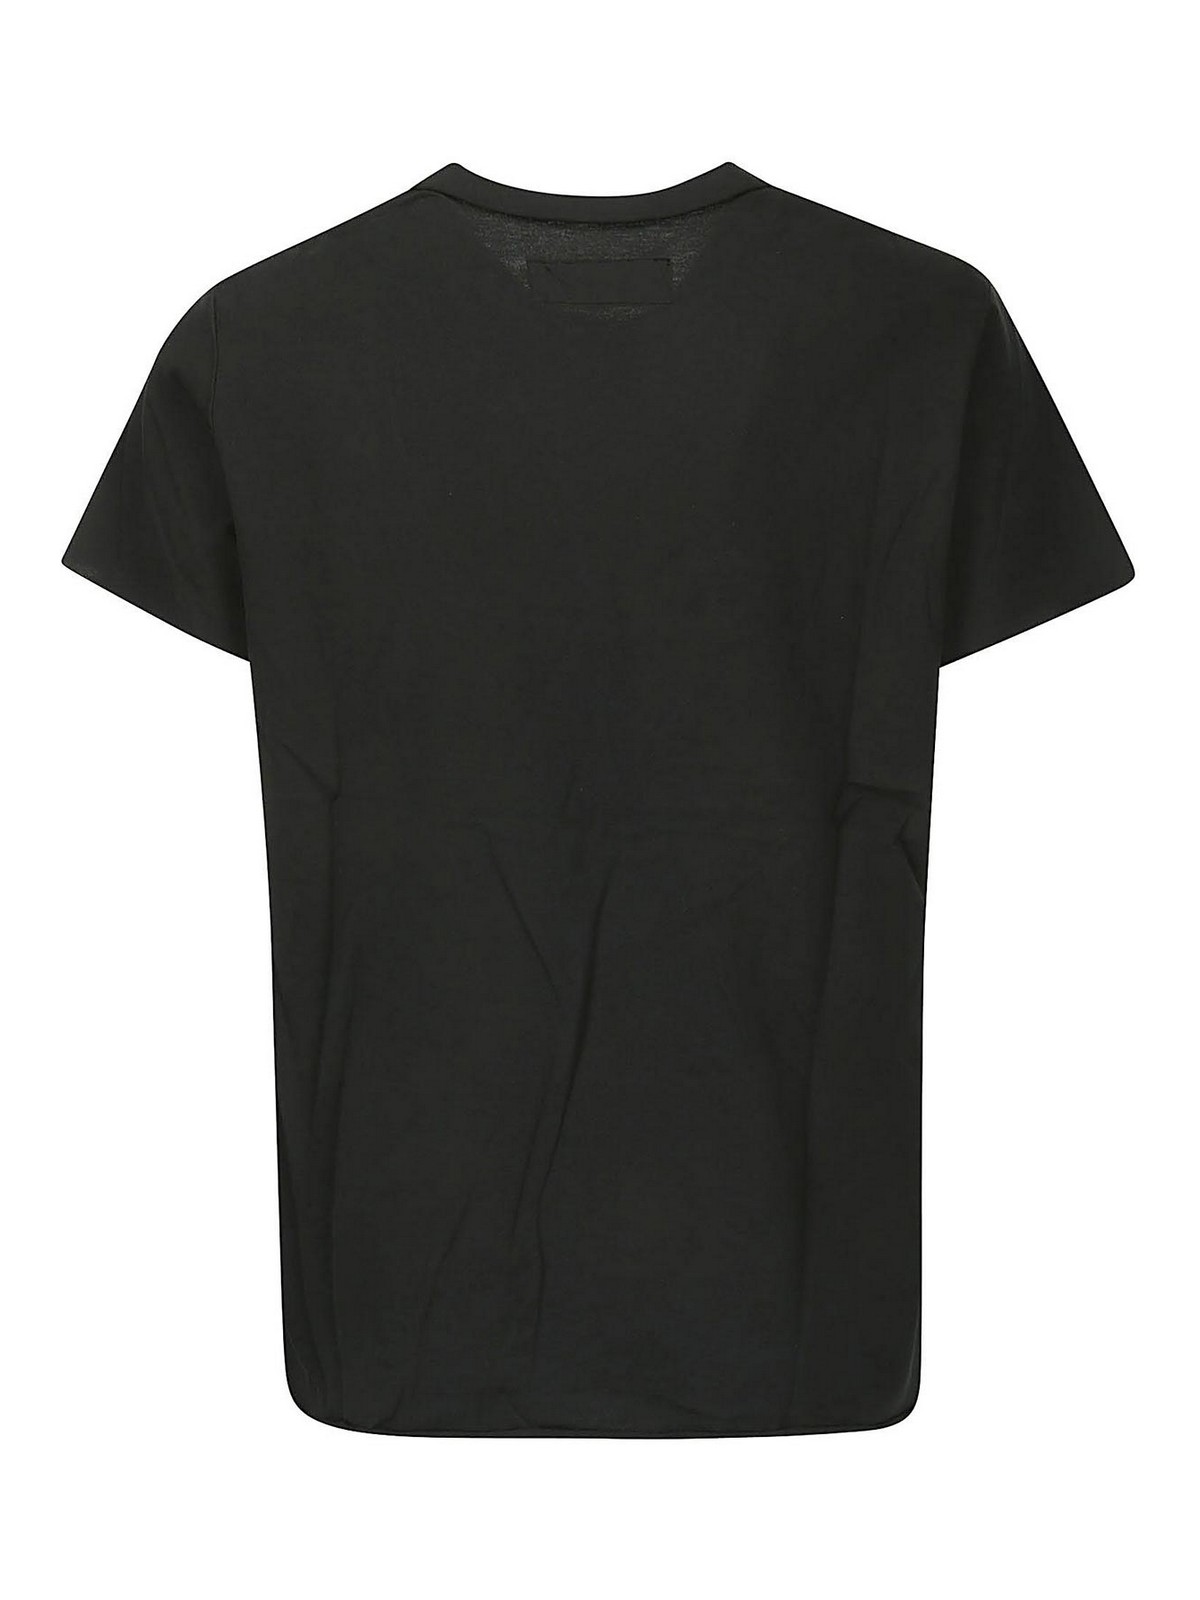 Shop Labo.art Camiseta - Negro In Black